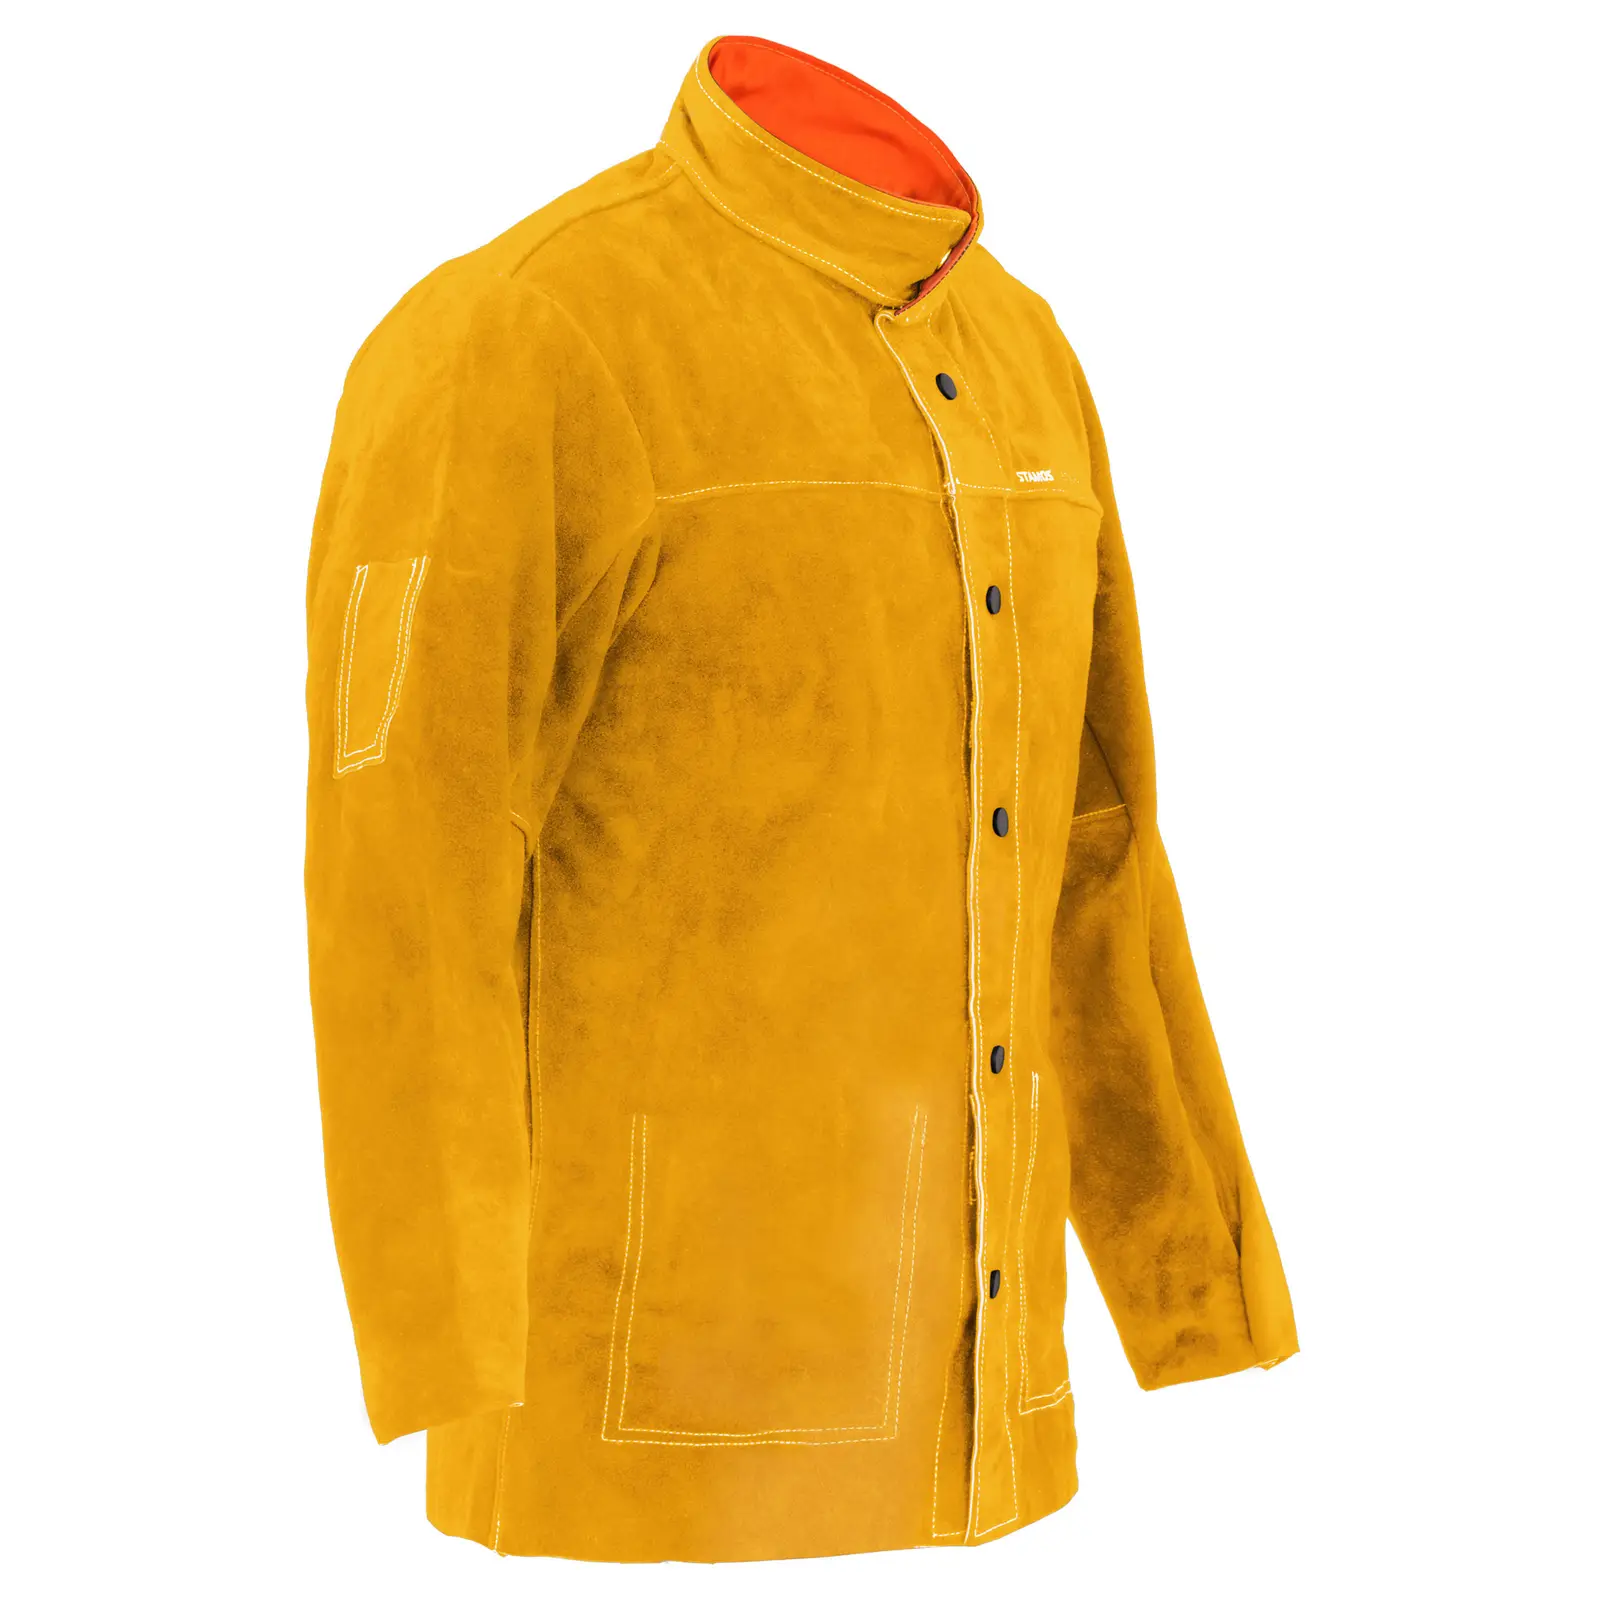 Cow Split Leather Welding Jacket - gold - size XL